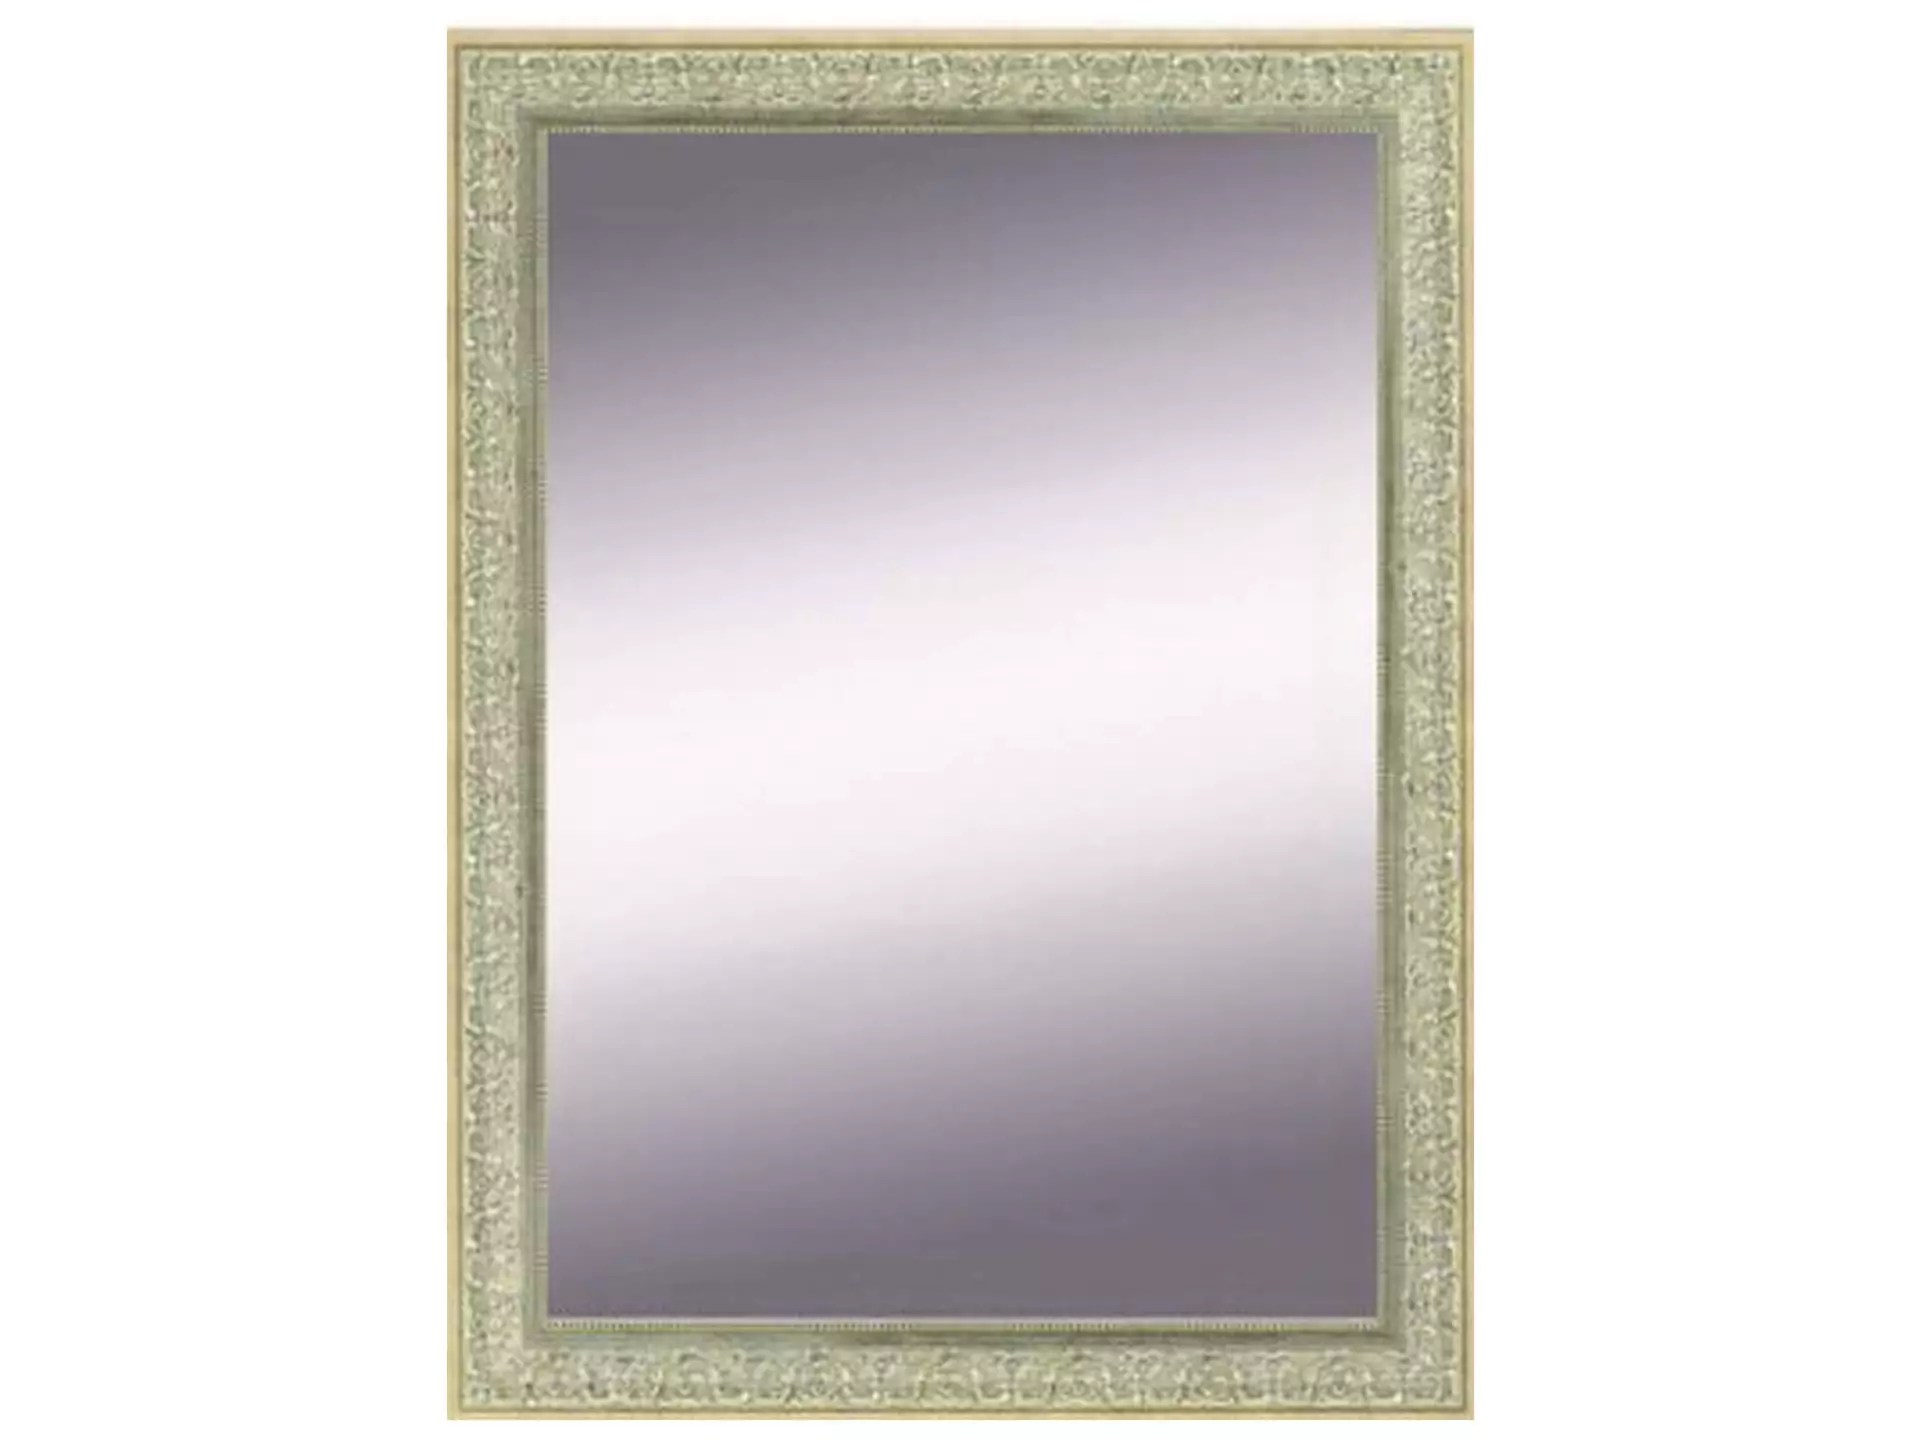 Spiegel Saskia Silber Len-Fra/ Farbe: Silber / Masse (BxH) :63,00x8,00 cm